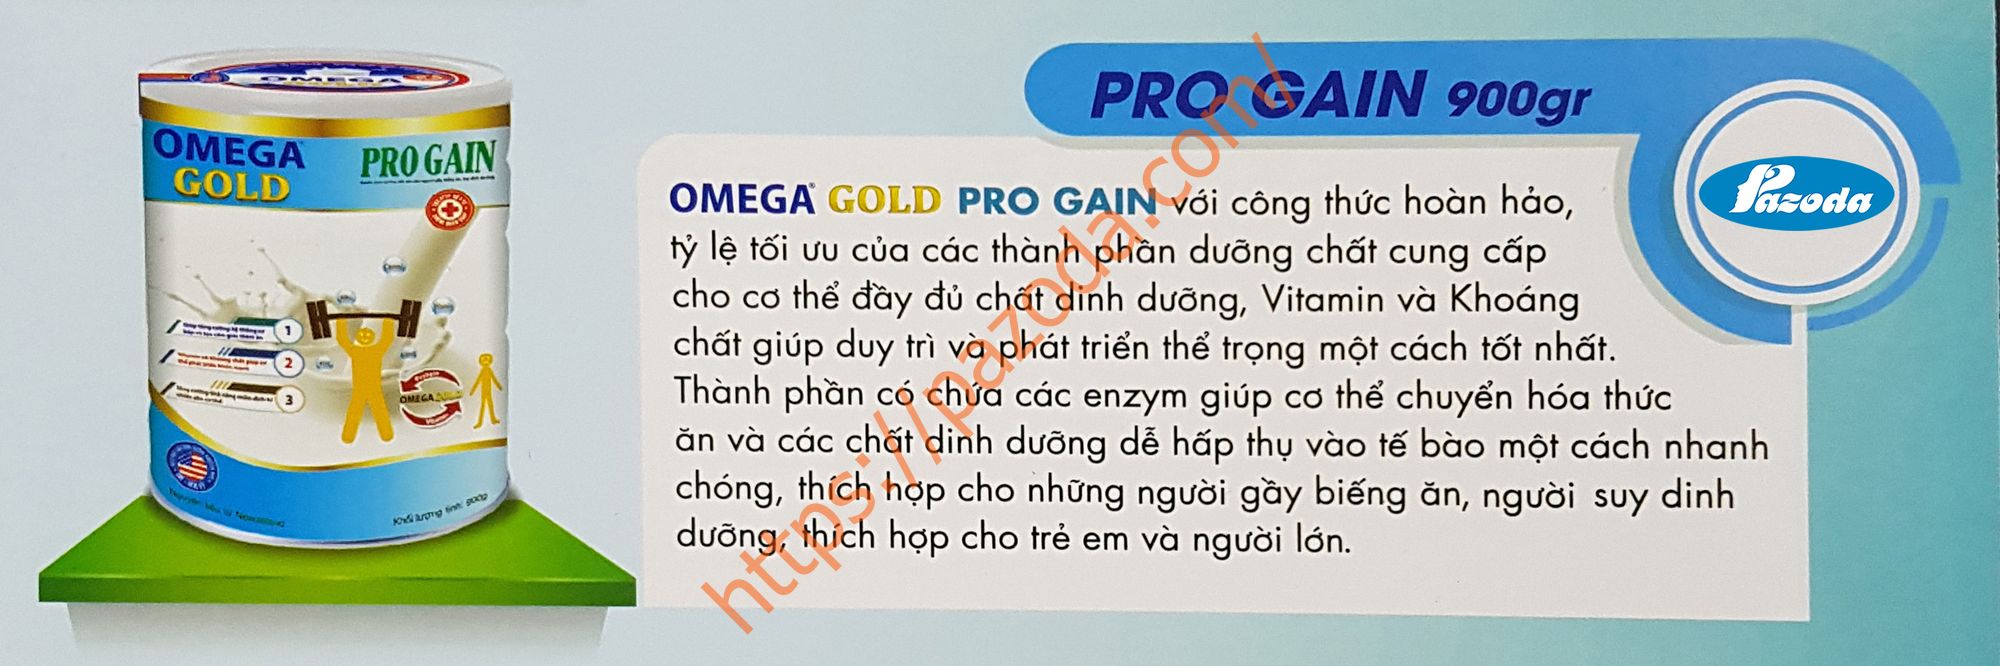 Sữa bột OMEGA GOLD Pro Gain 900g